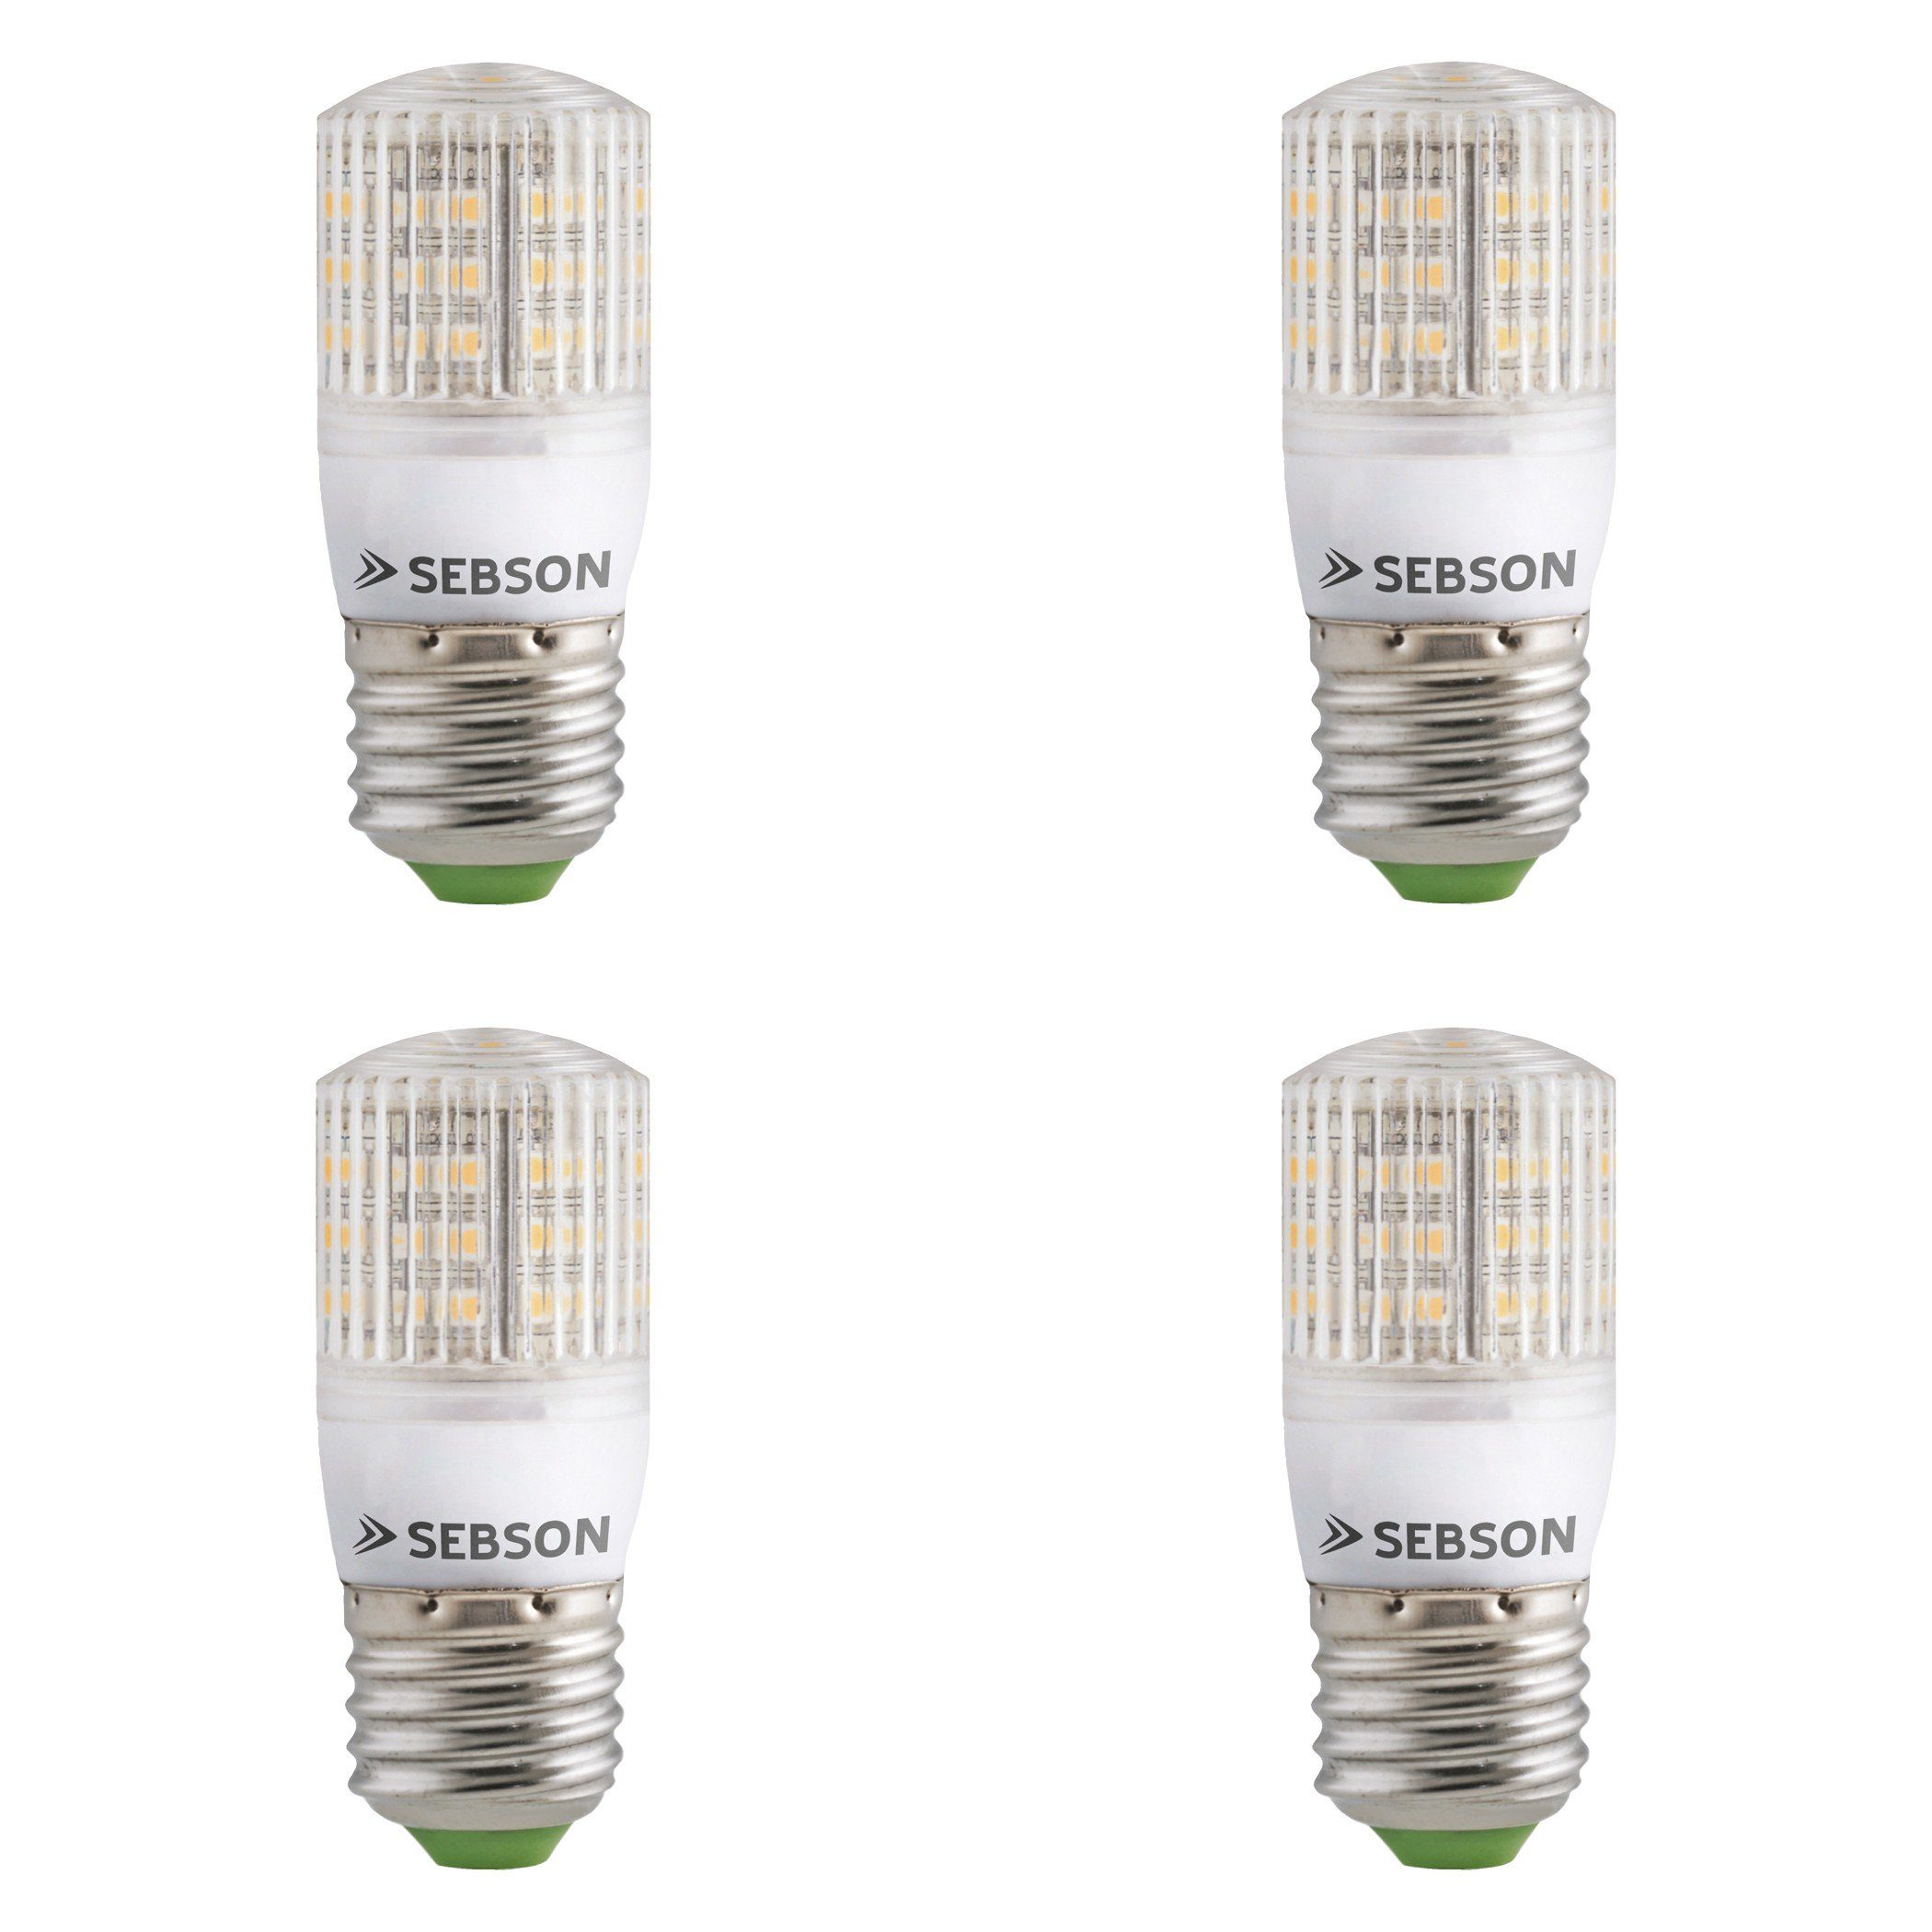 SEBSON »4er Pack E27 LED 3W Lampe - 240 Lumen – E27 LED warmweiß – LED  Leuchtmittel 280°« LED-Leuchtmittel online kaufen | OTTO